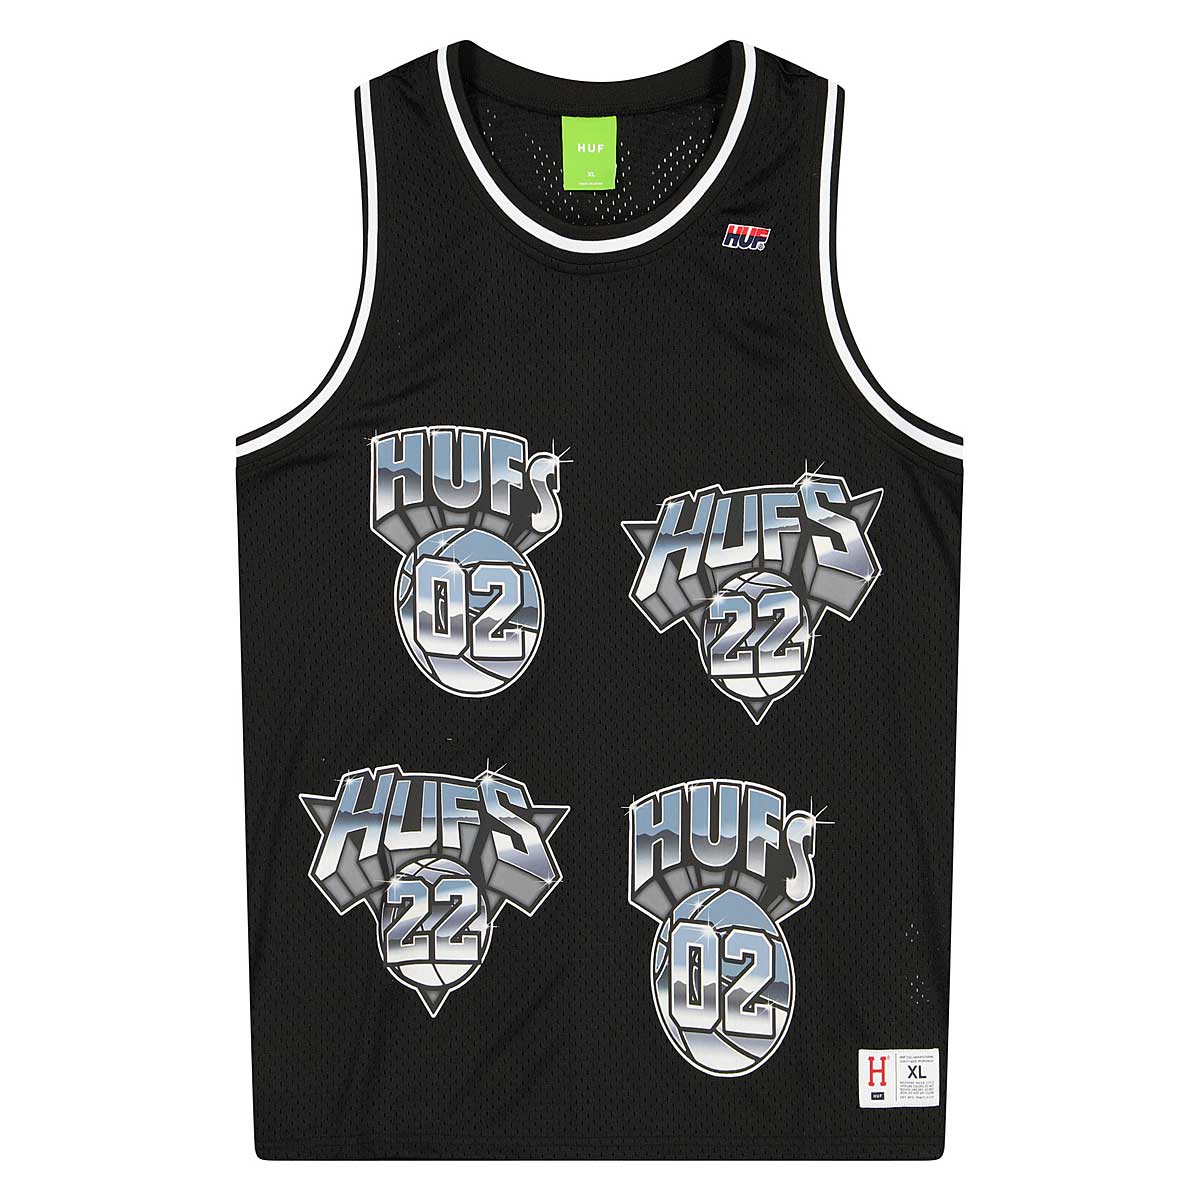 Huf Basketball Jersey, Black